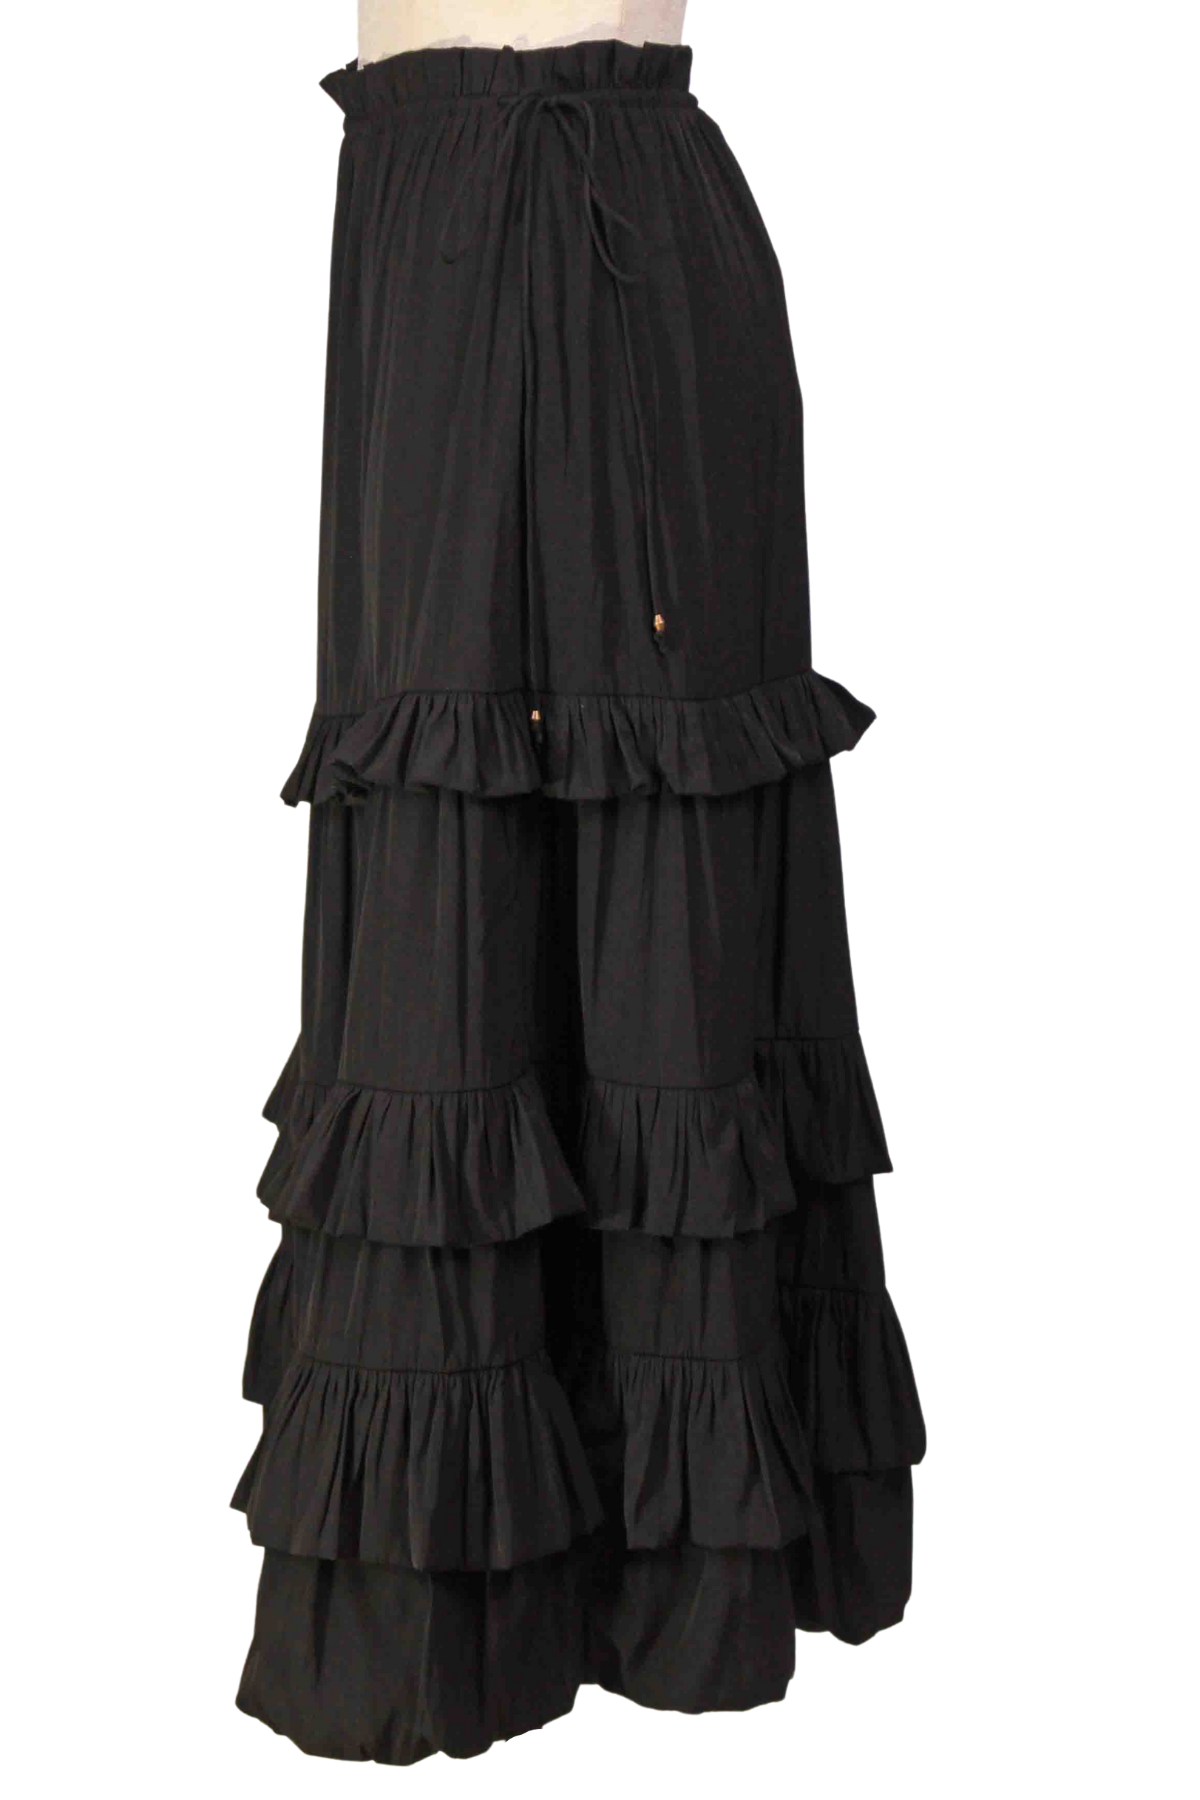 side view of Black Moira Ruffled Midi Length Skirt by Marie Oliver